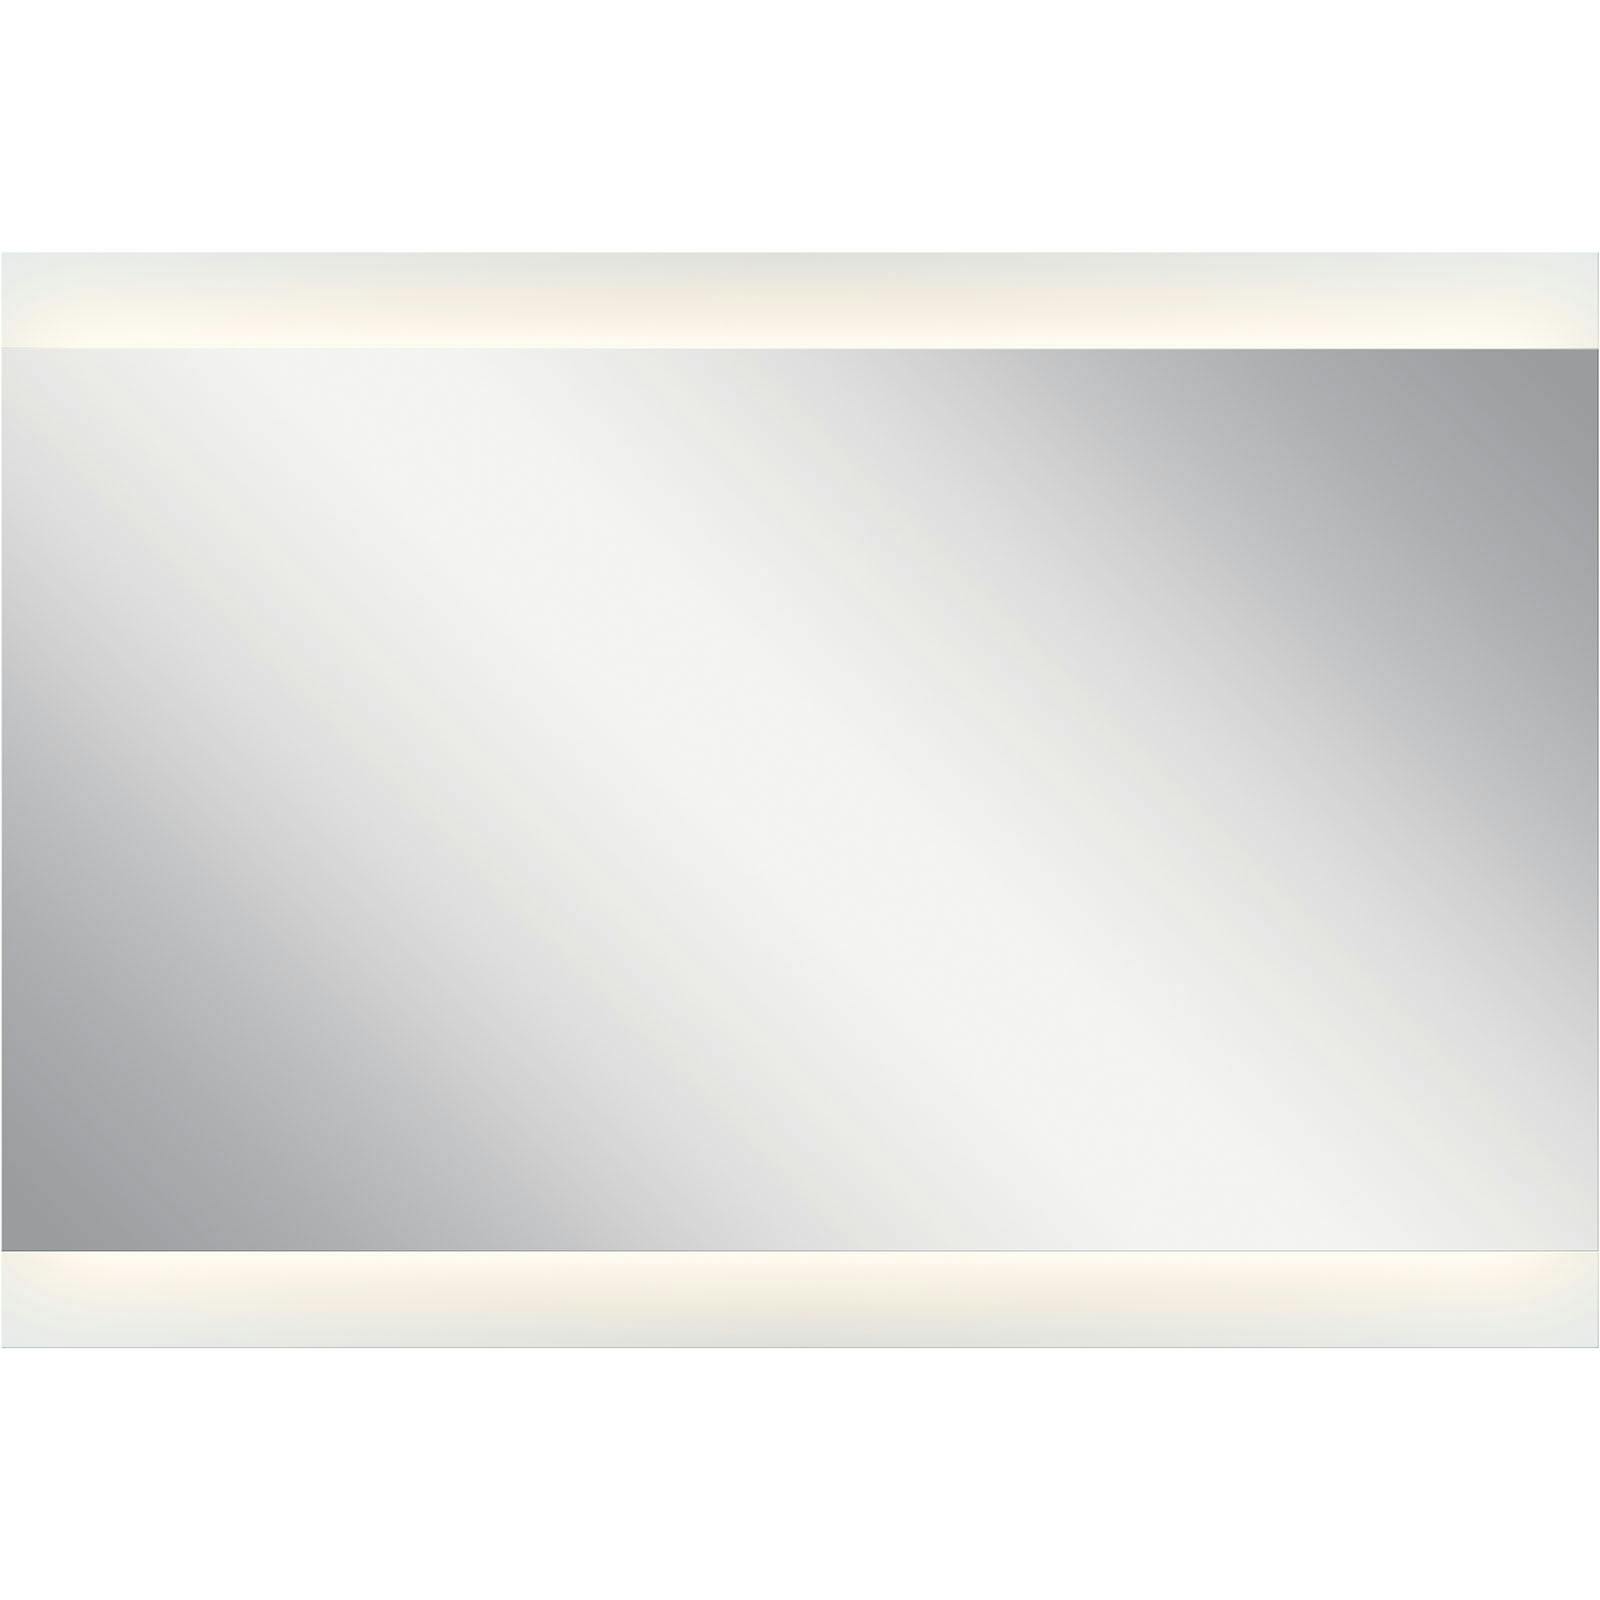 39" x 27" Rectangular LED Backlit Mirror on a white background